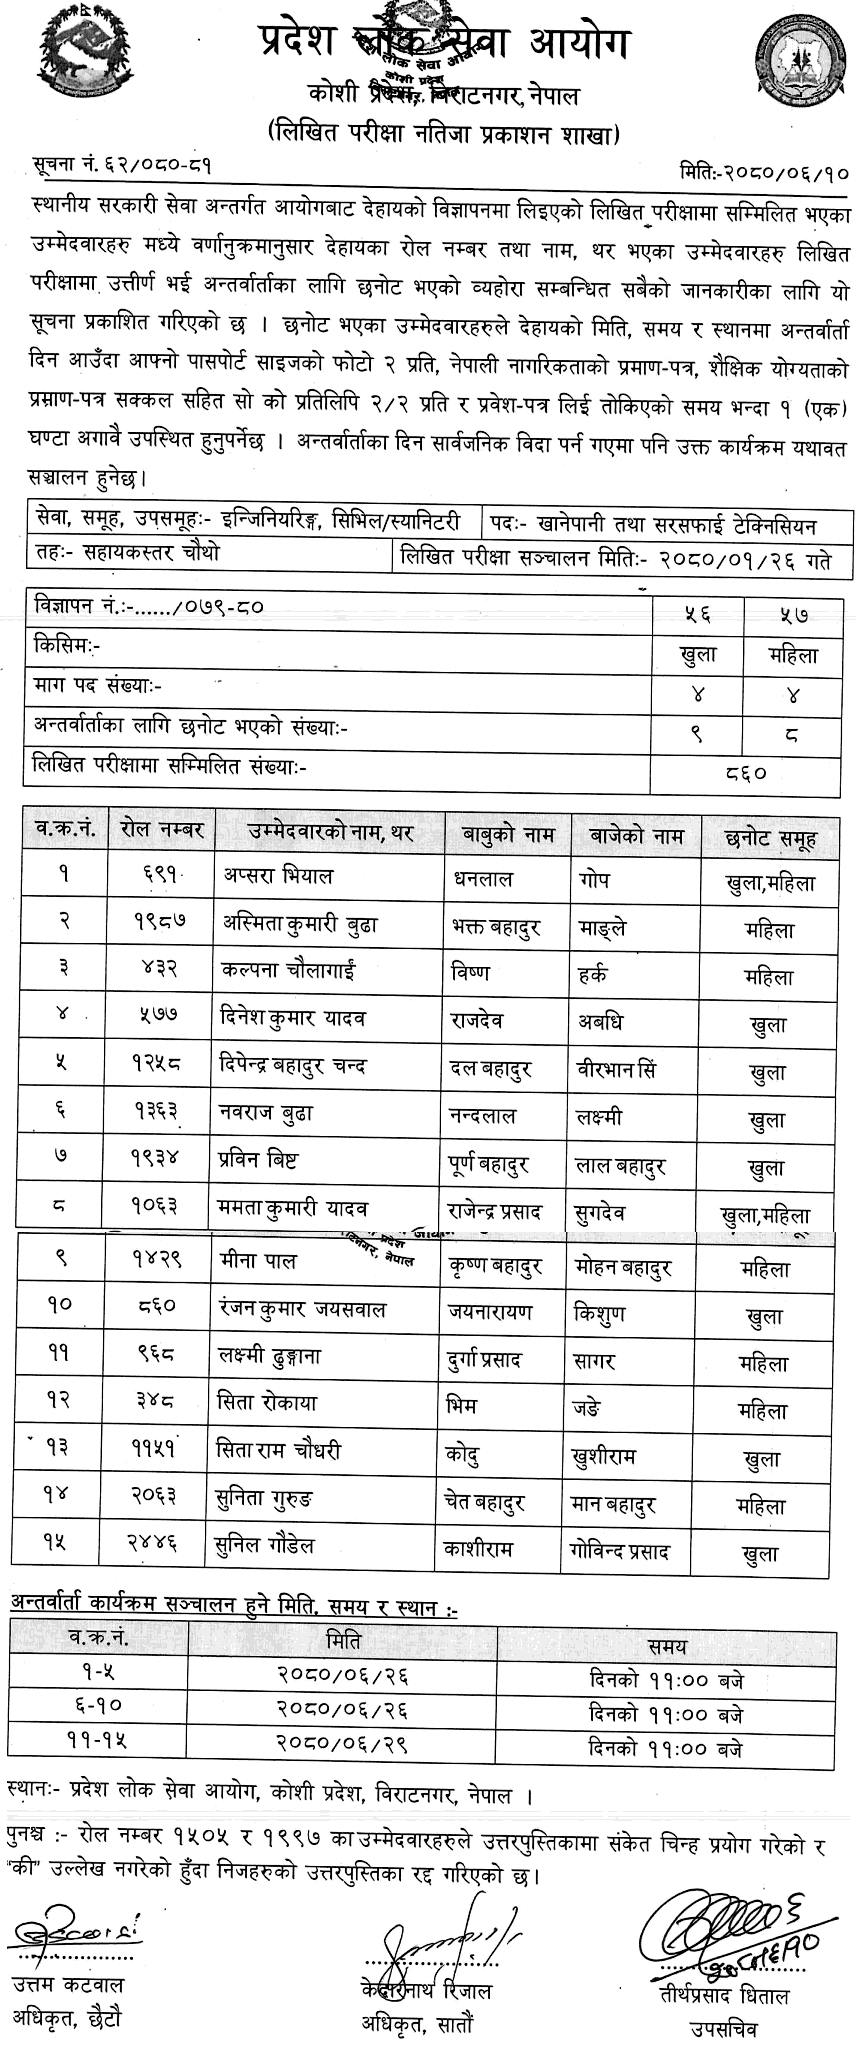 Koshi Pradesh Lok Sewa Aayog Written Exam Result of 5th Level Techician 2080